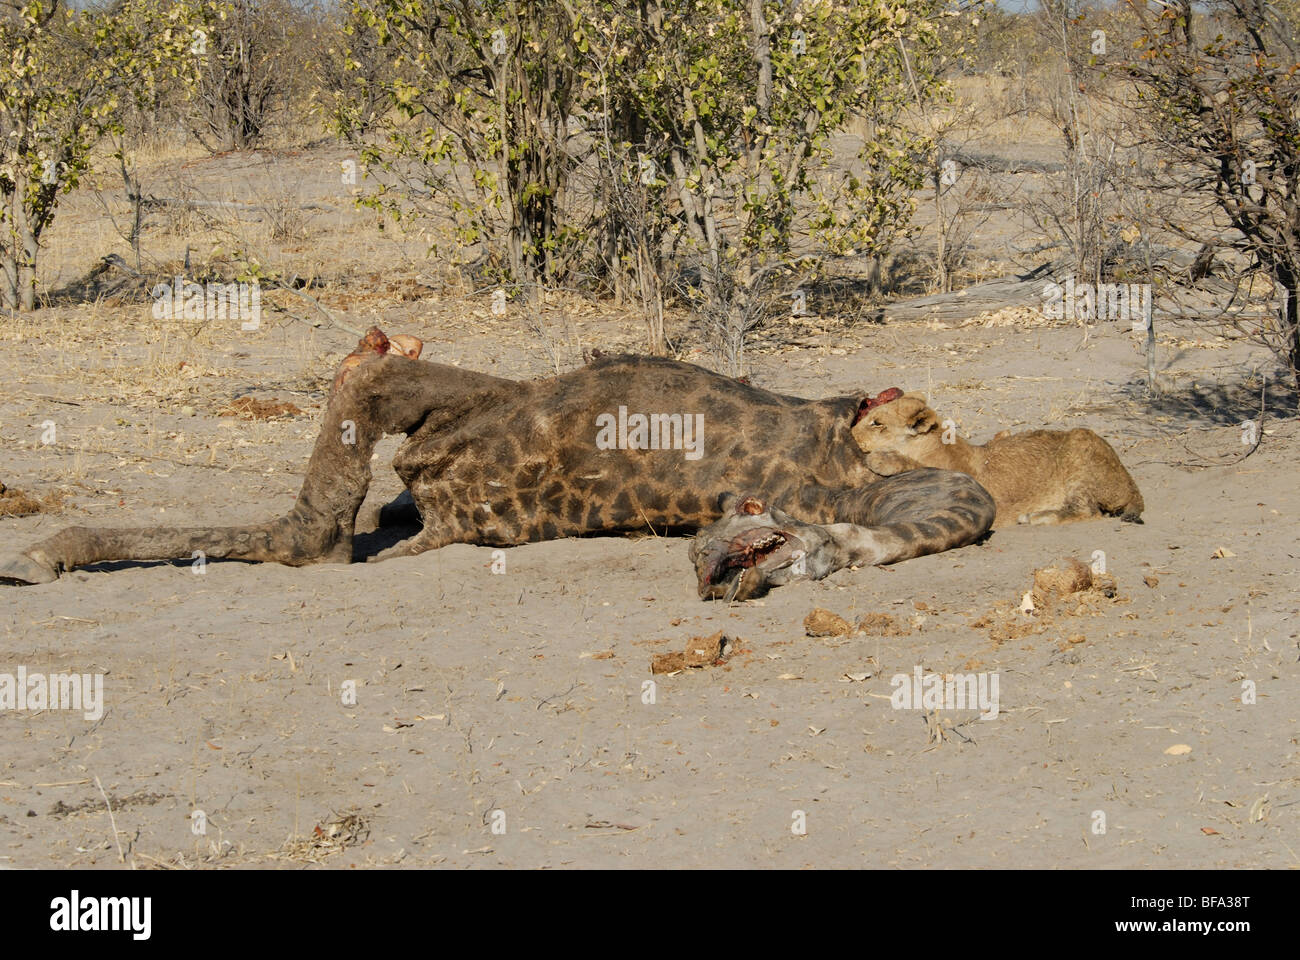 Stock photo of a young lion feeding on a giraffe carcass. Stock Photo